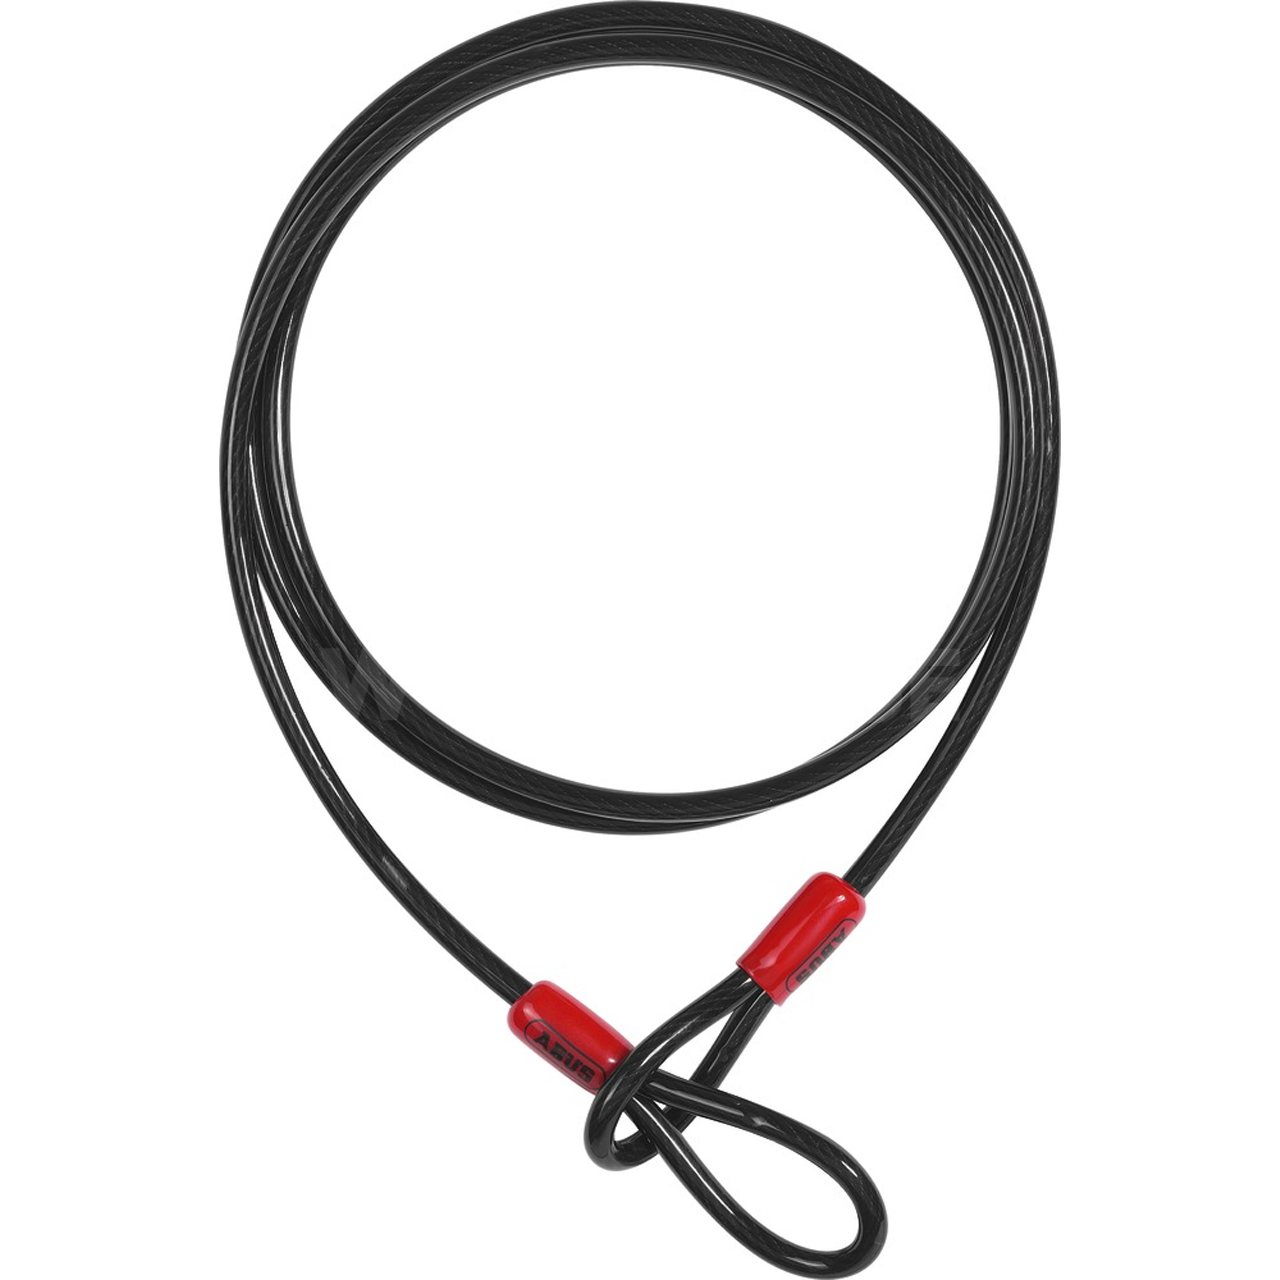 ABUS Cobra Cable